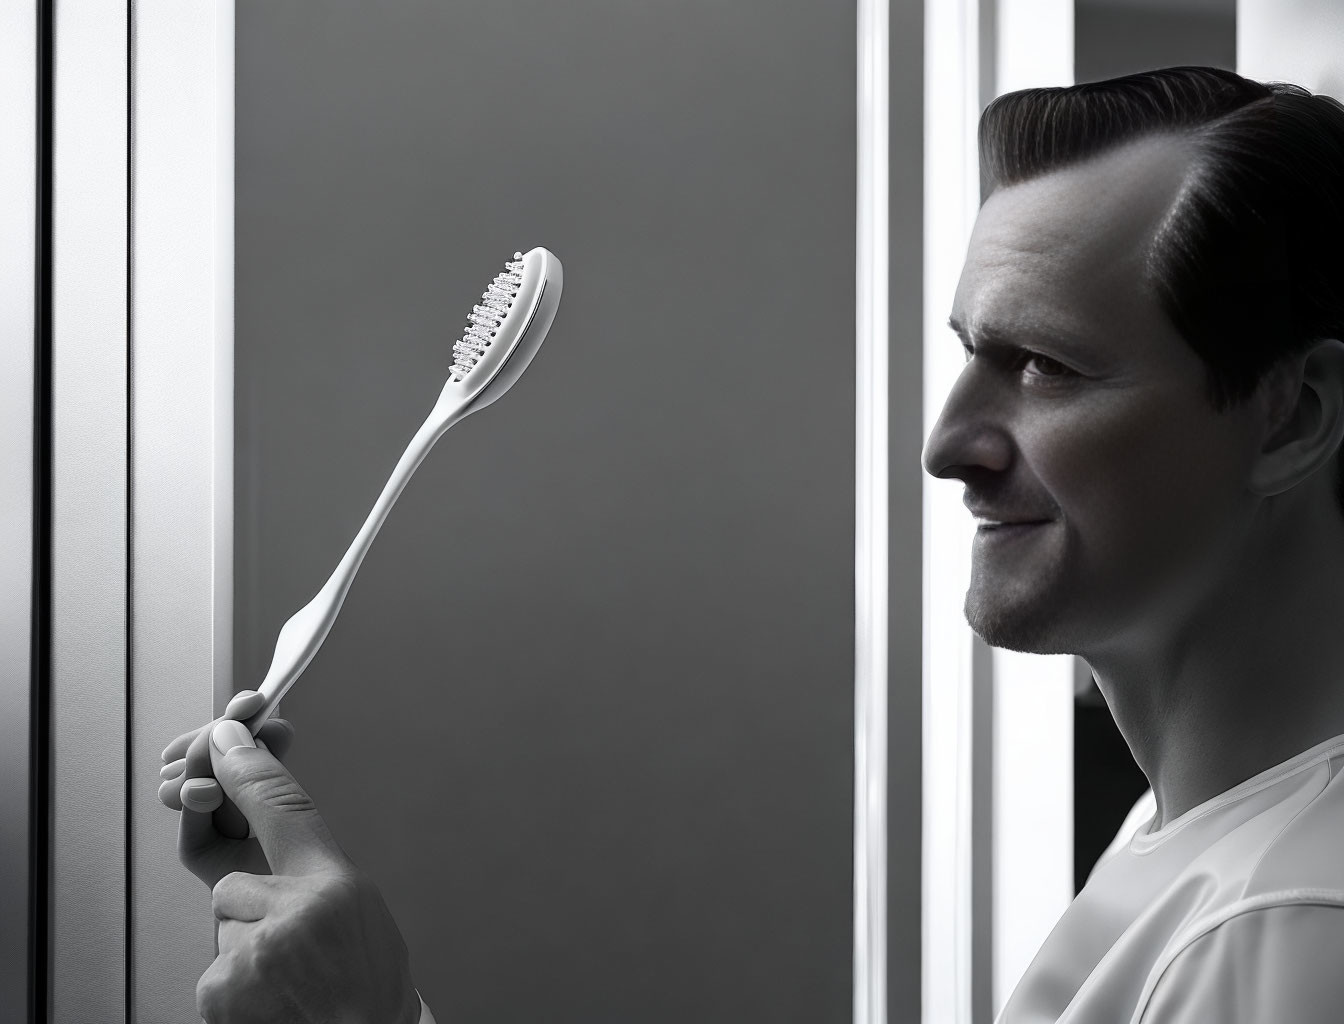 Man in white shirt examines toothbrush under light source